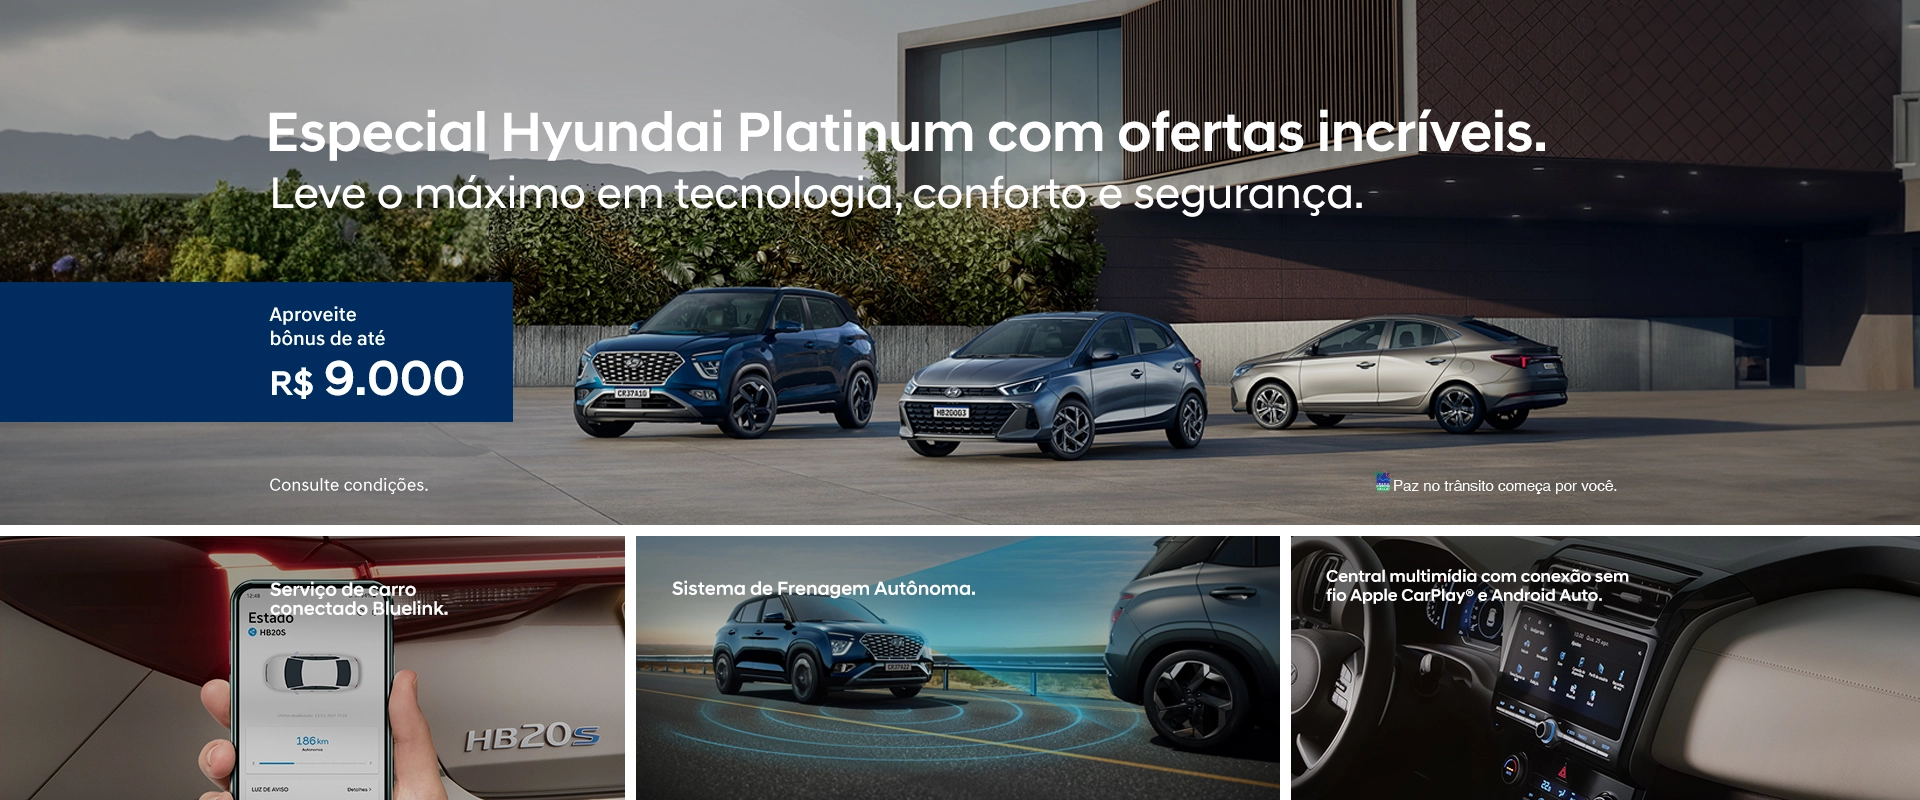 Ofertas: Hyundai Platinum